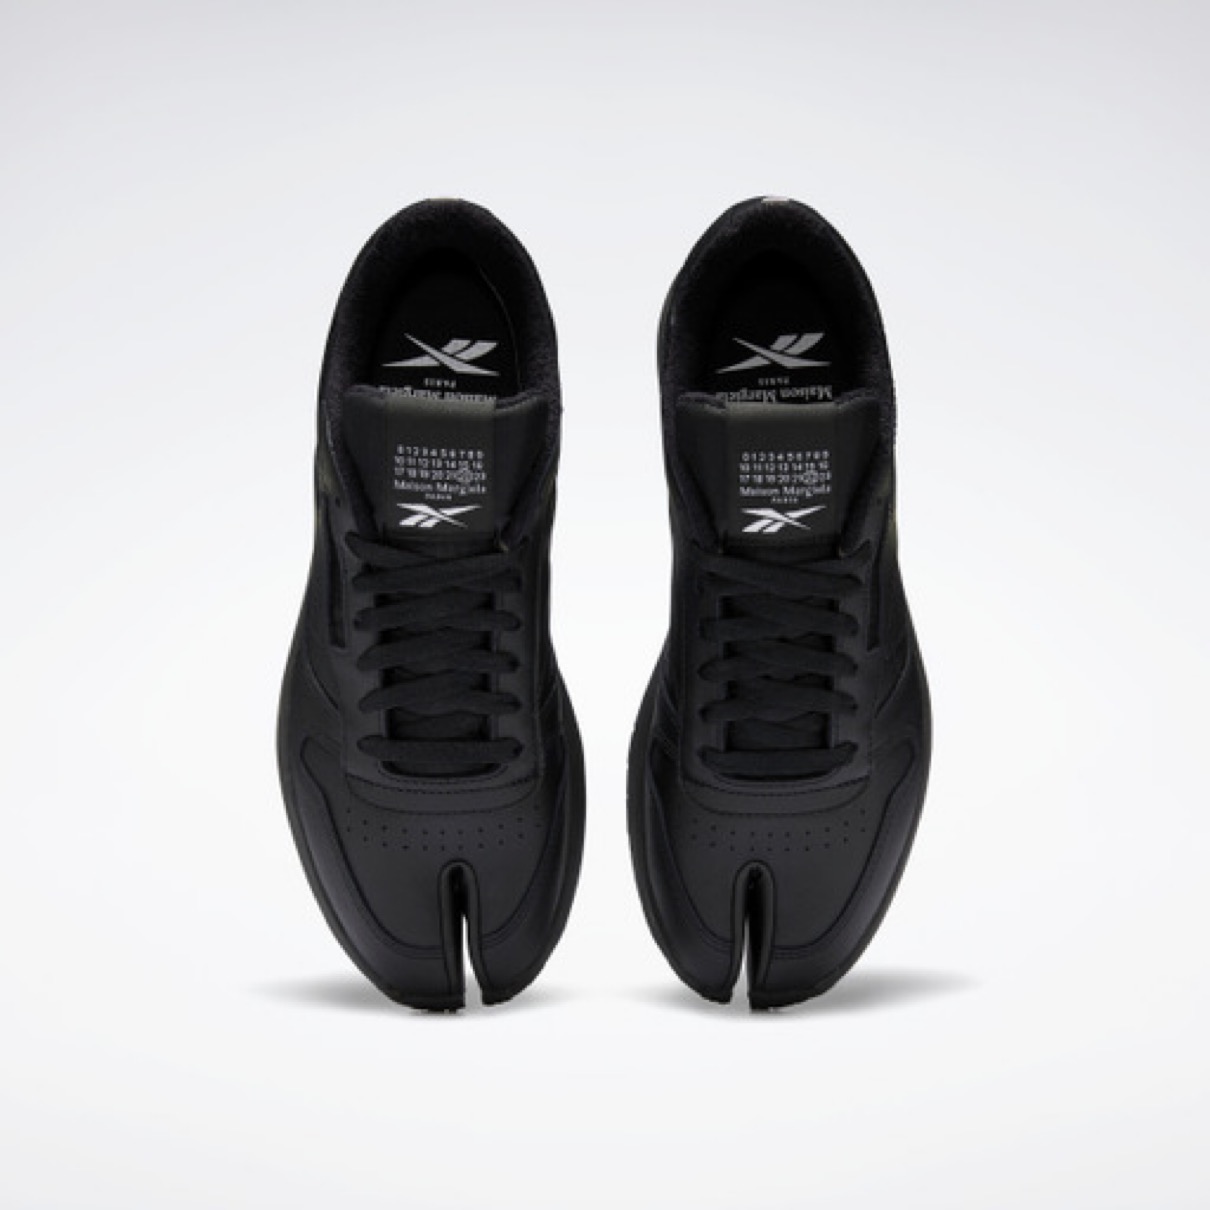 Maison Margiela × Reebok】Classic Leather Tabi “Black” & “White”が 